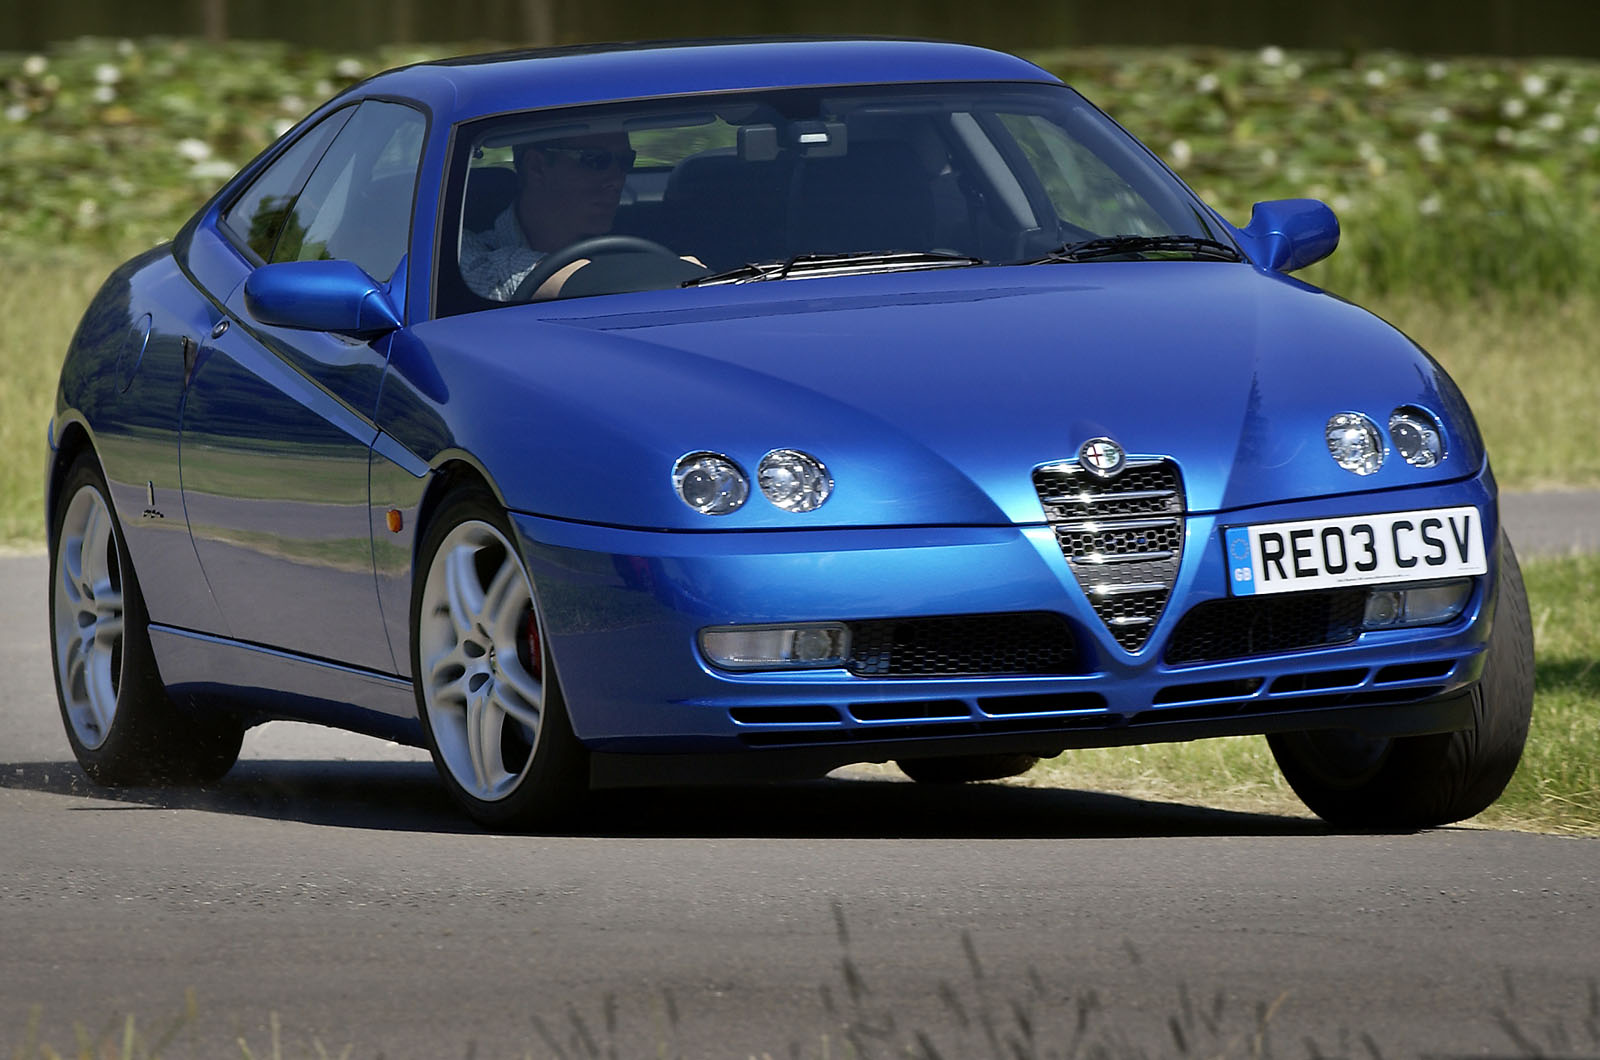 Used Car Buying Guide: Alfa Romeo Gtv | Autocar